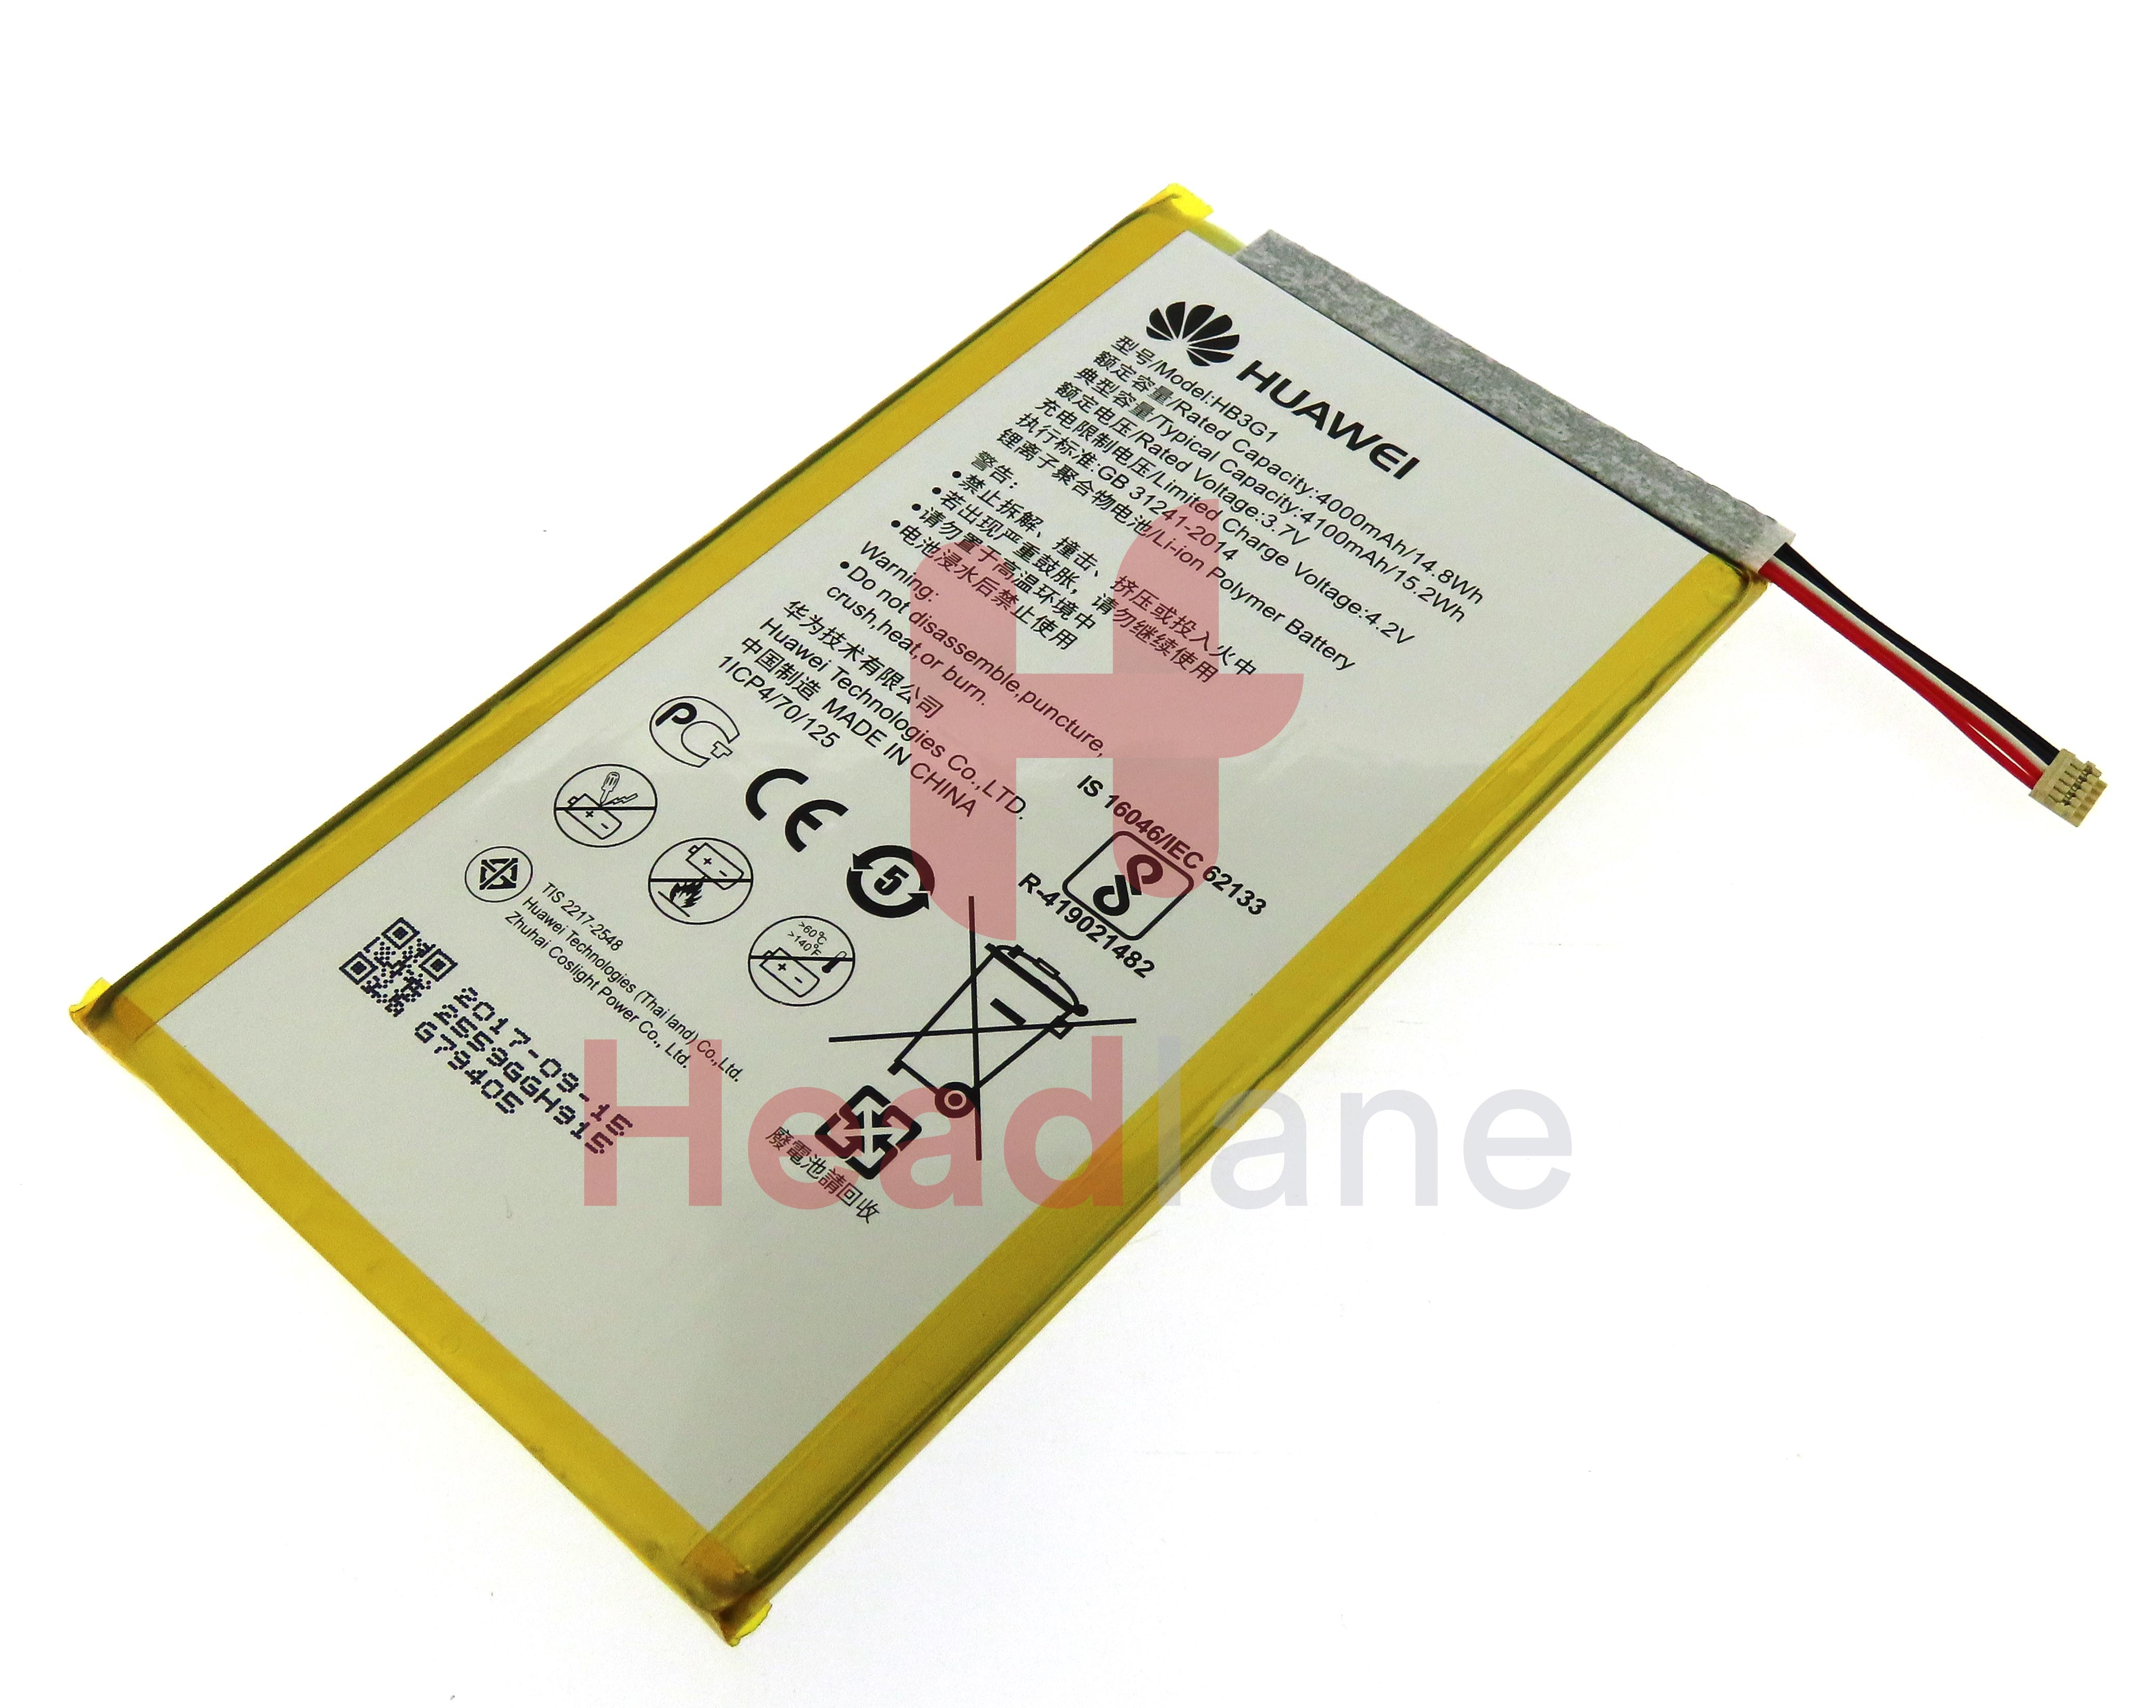 Huawei MediaPad T1 7&quot; HBG31 Internal Battery